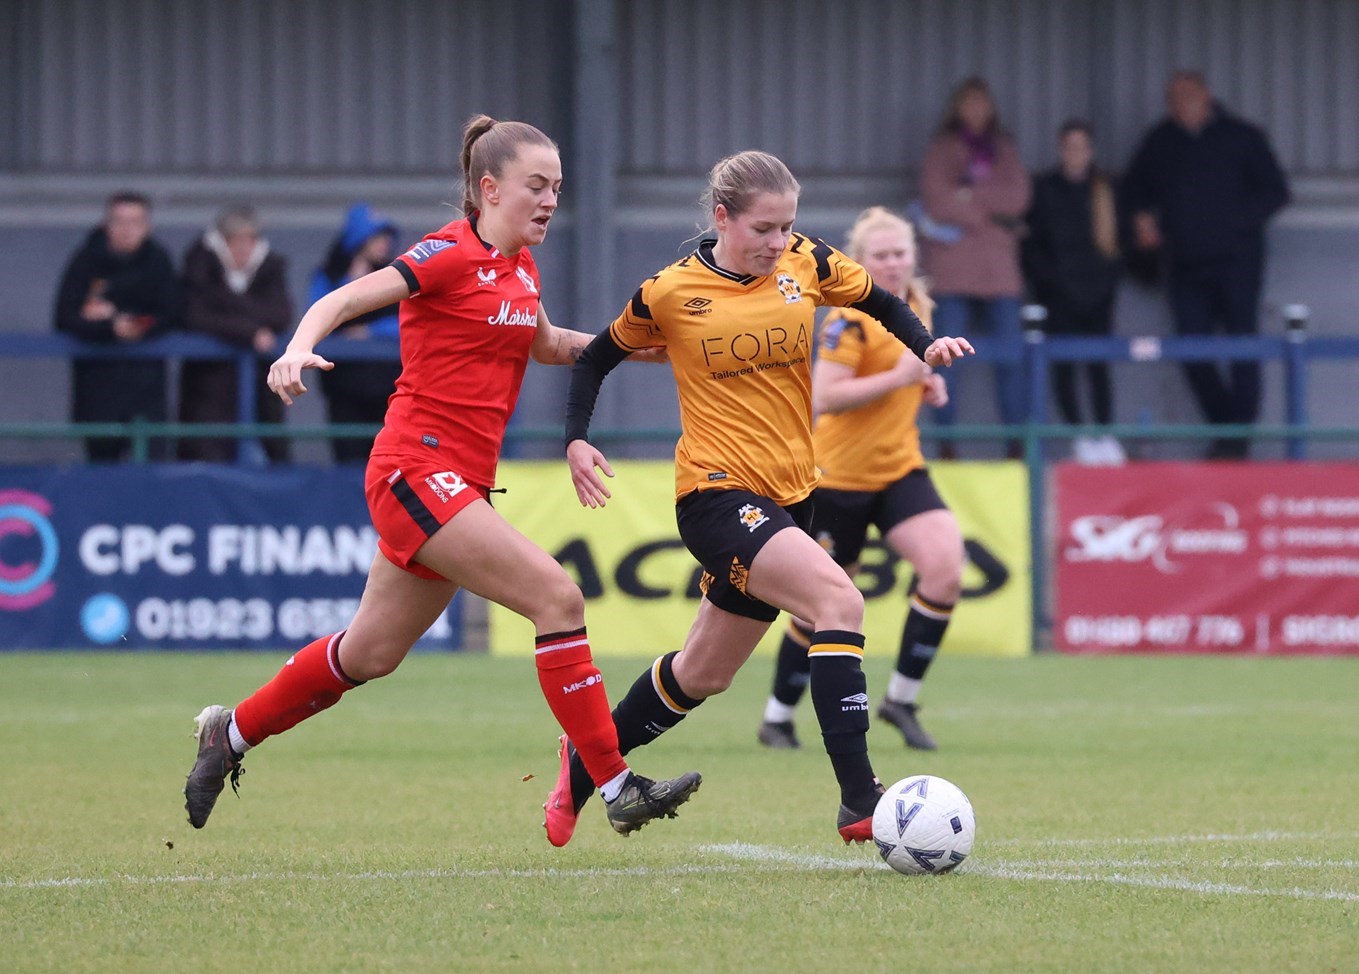 U's narrowly beaten in Women's FA Cup tie - News - Cambridge United